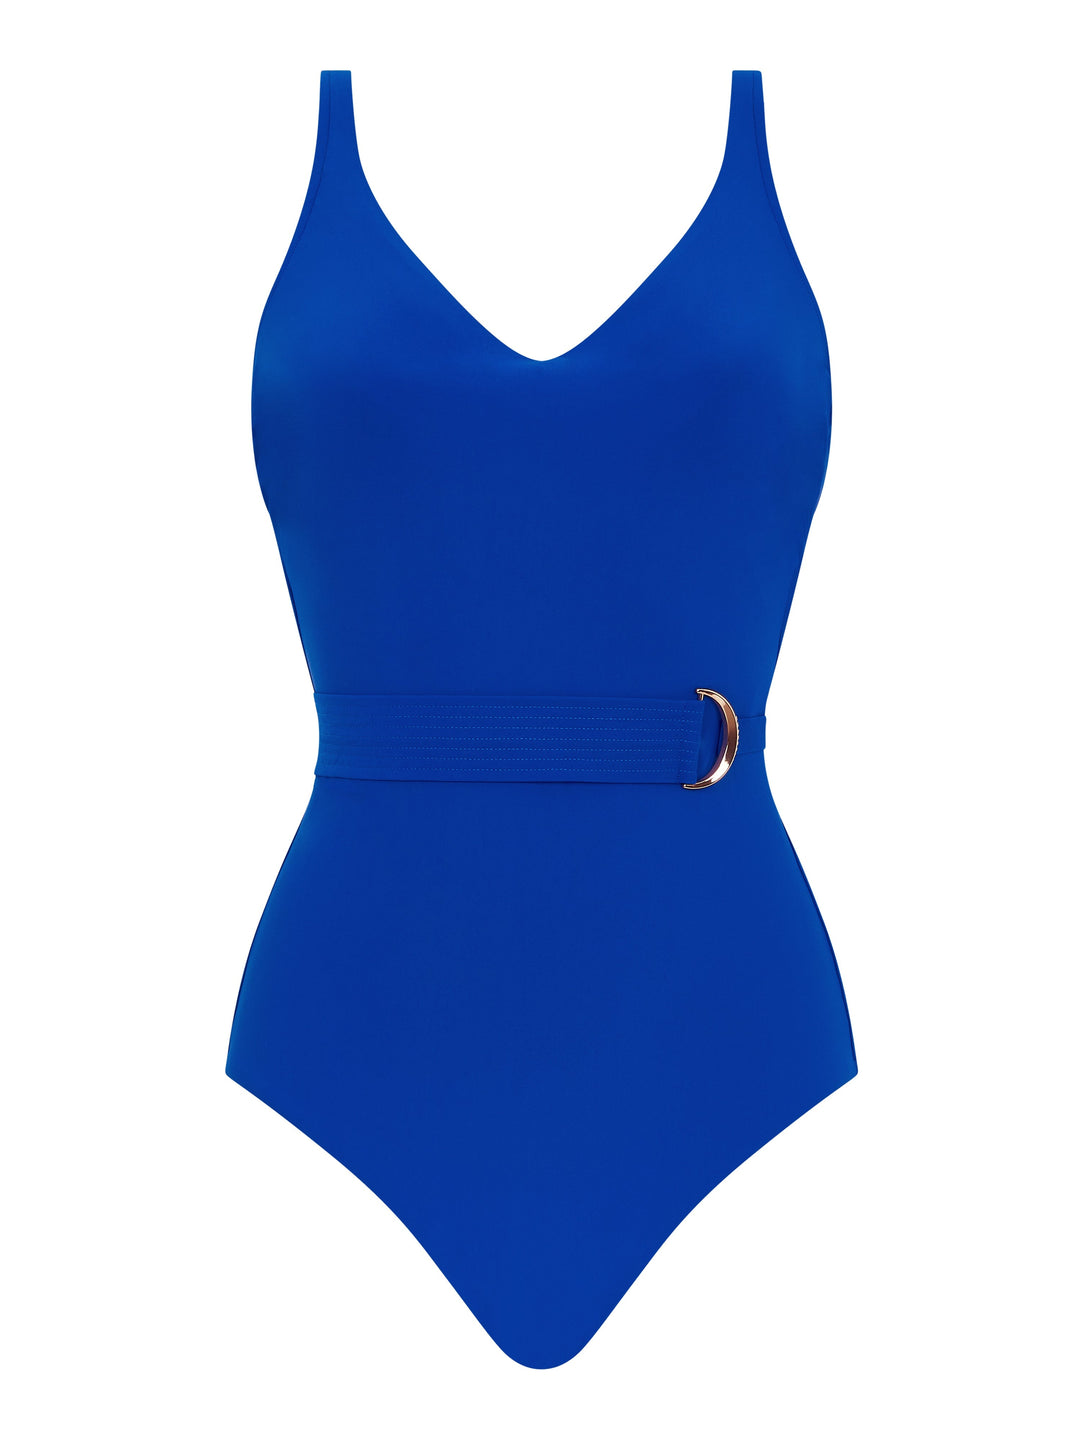 Купальники Chantelle - Купальник Celestial с глубоким вырезом на косточках Темно-синий бикини с глубоким вырезом Chantelle Swimwear